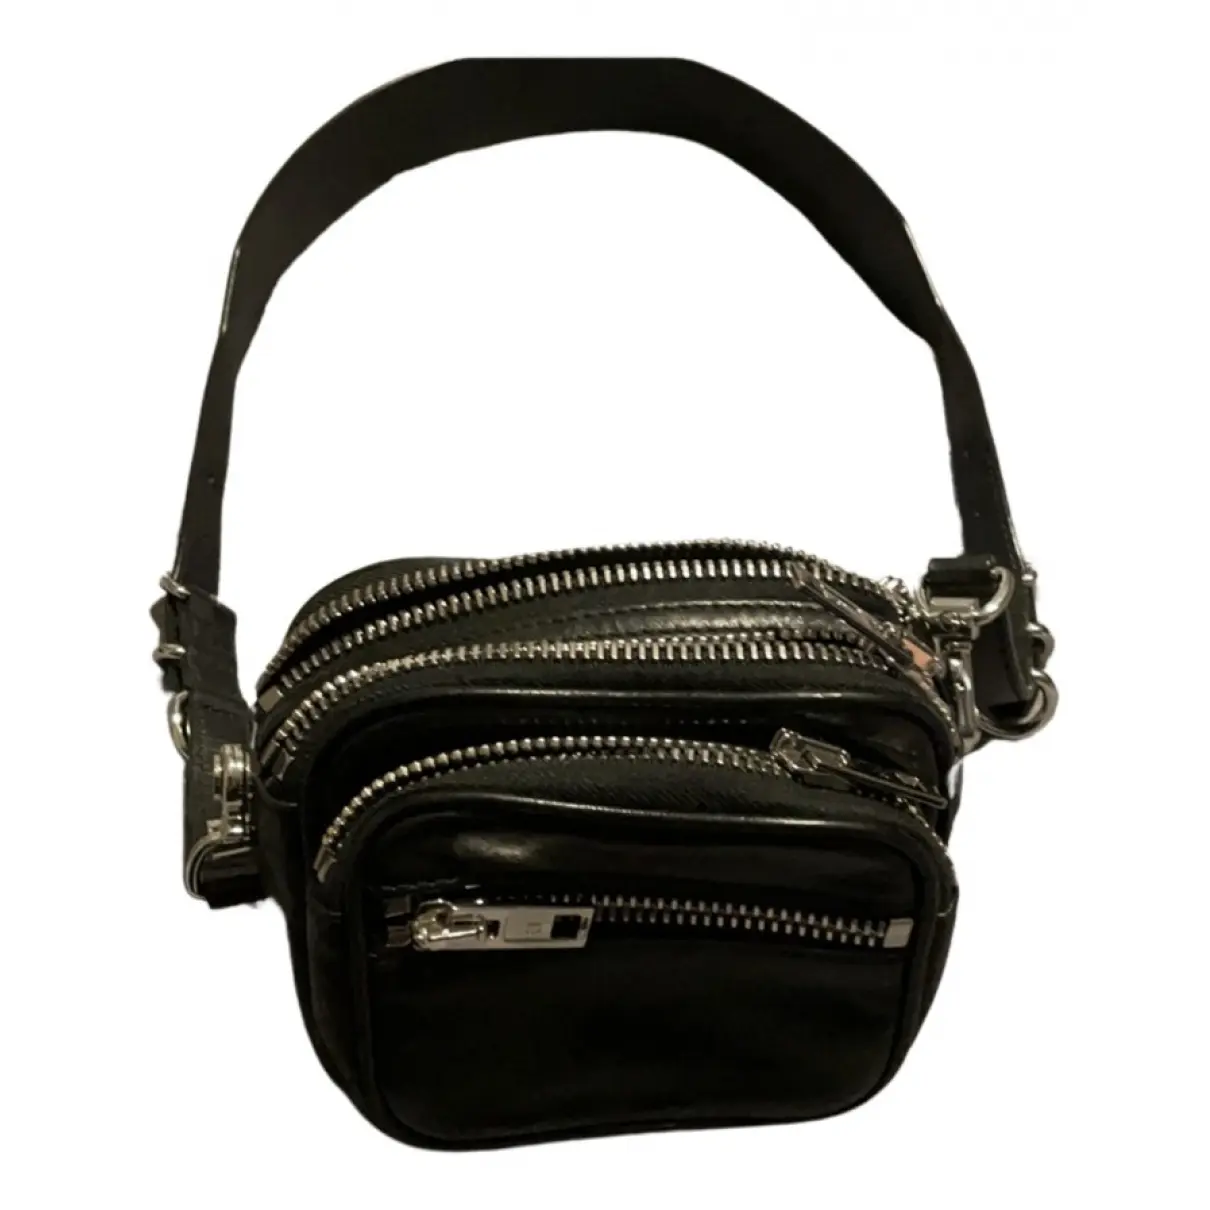 Attica leather handbag Alexander Wang